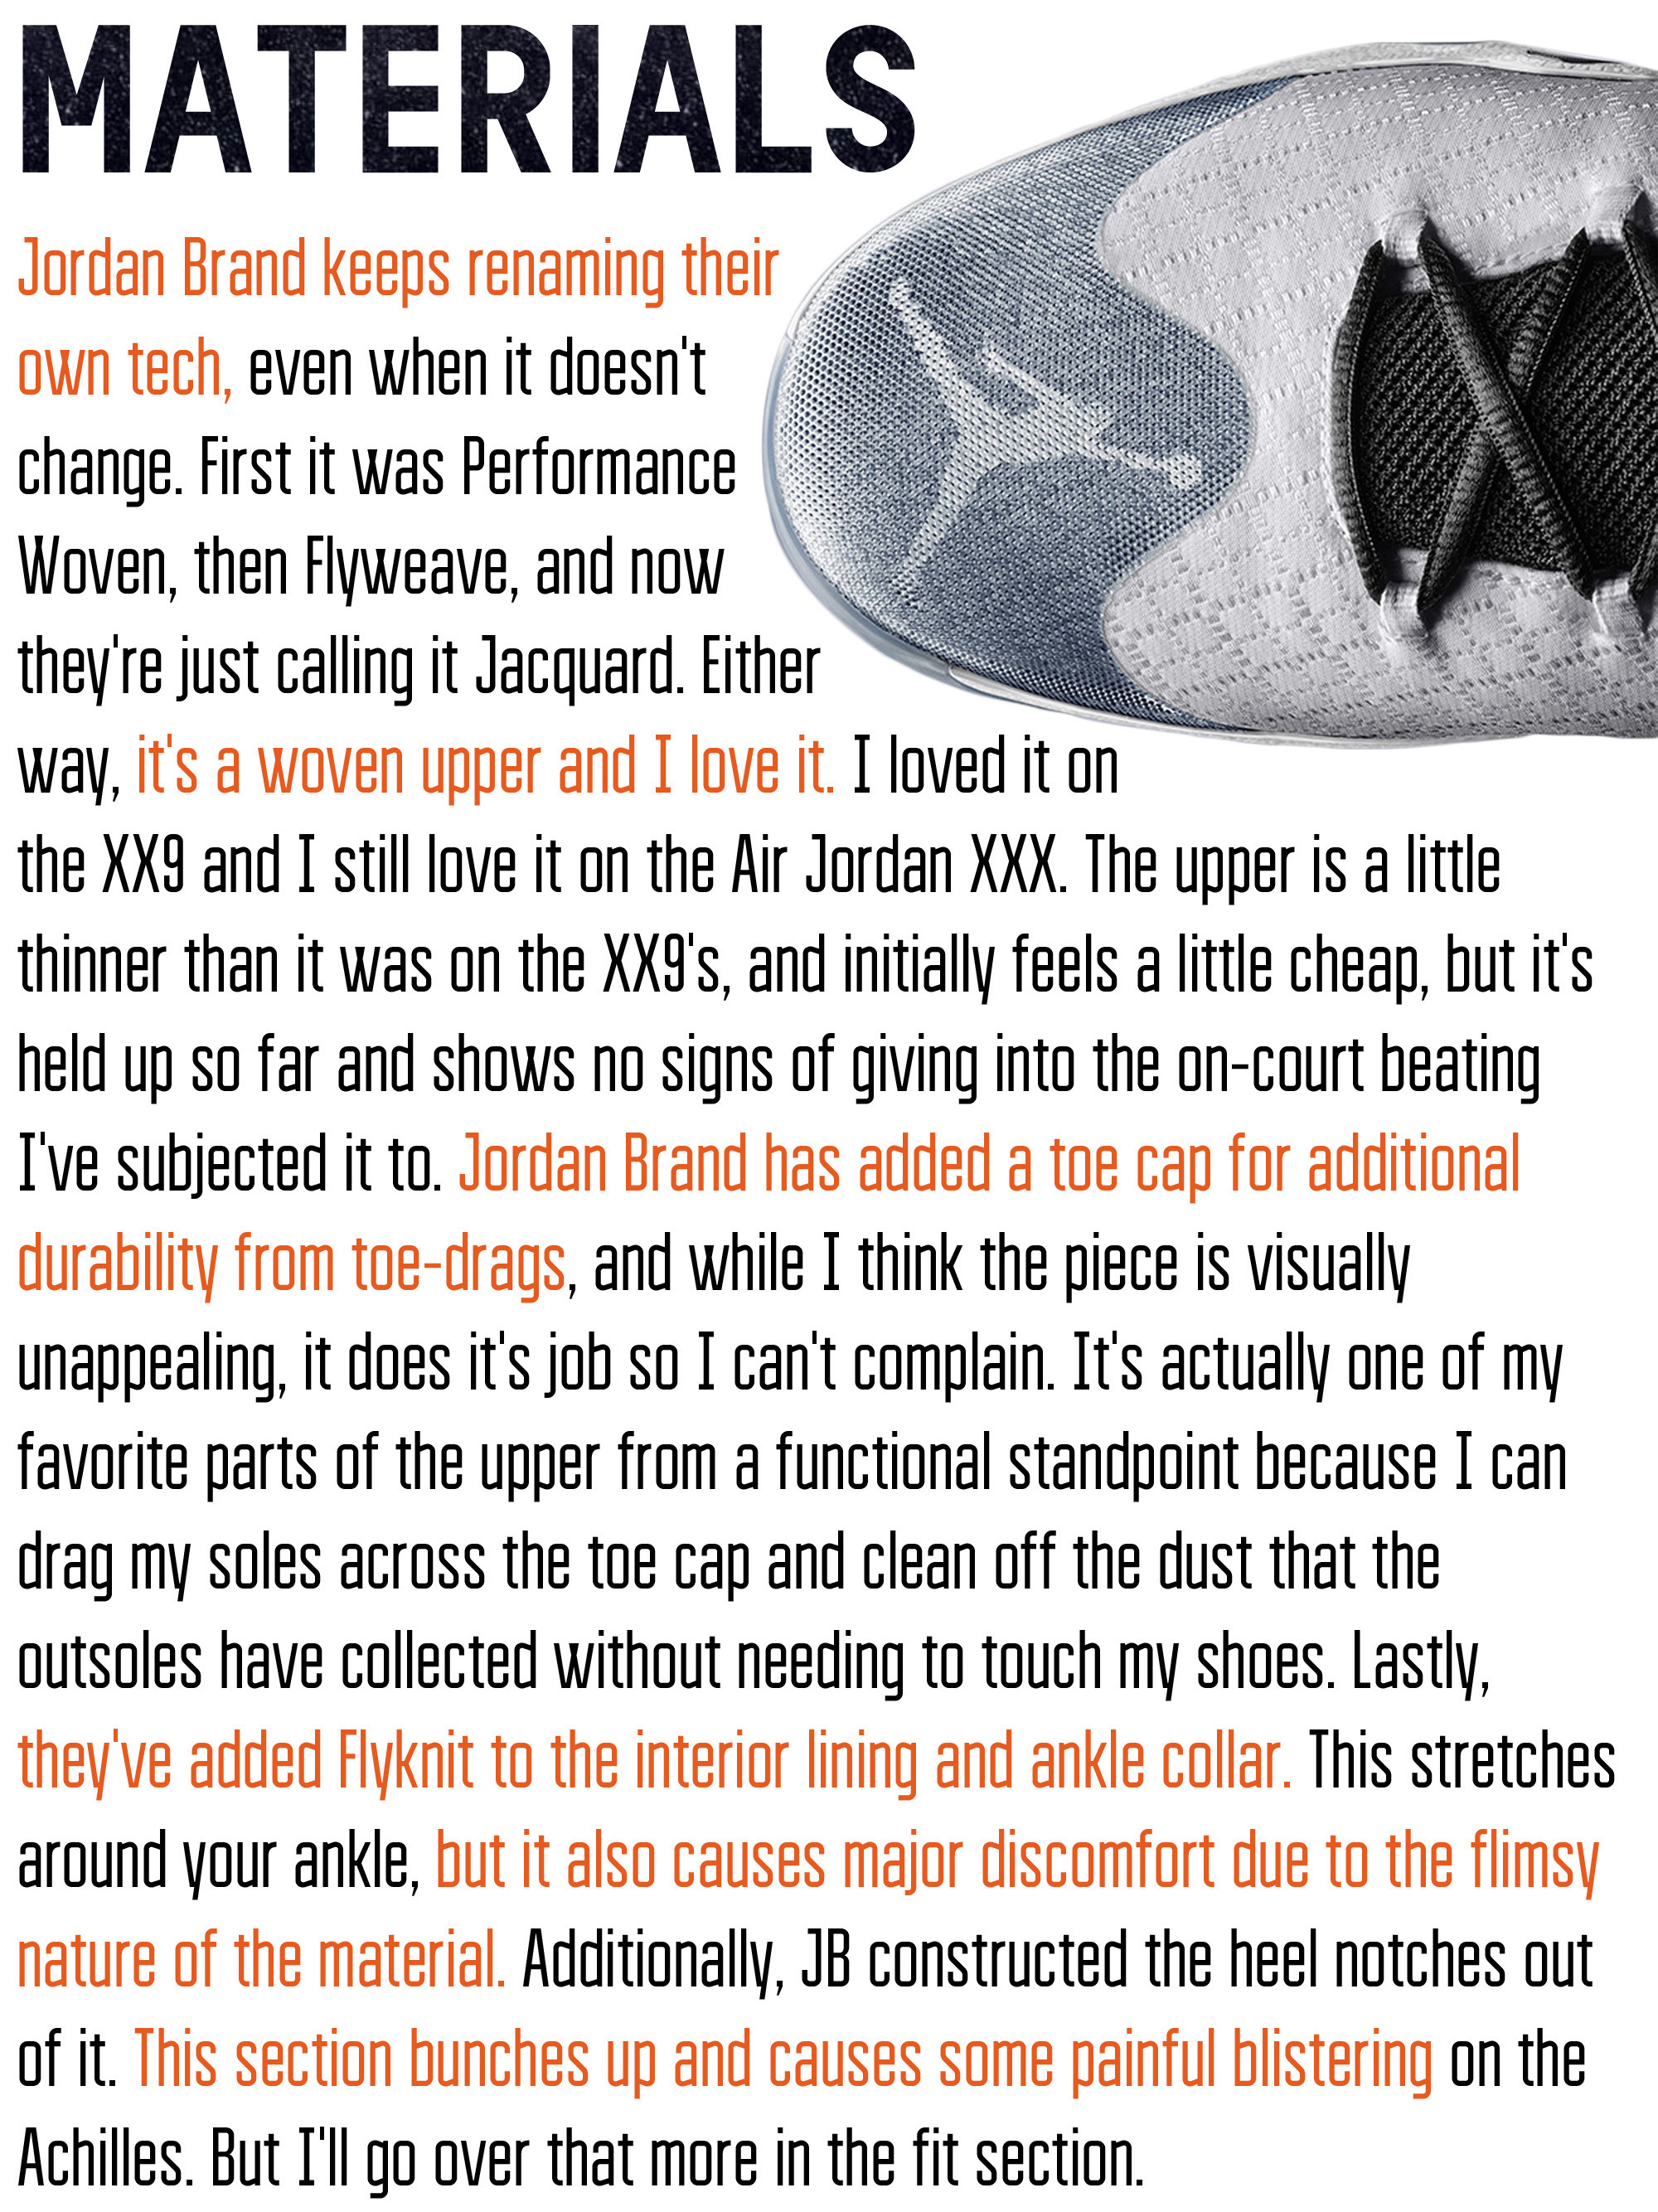 Air Jordan XXX Materials